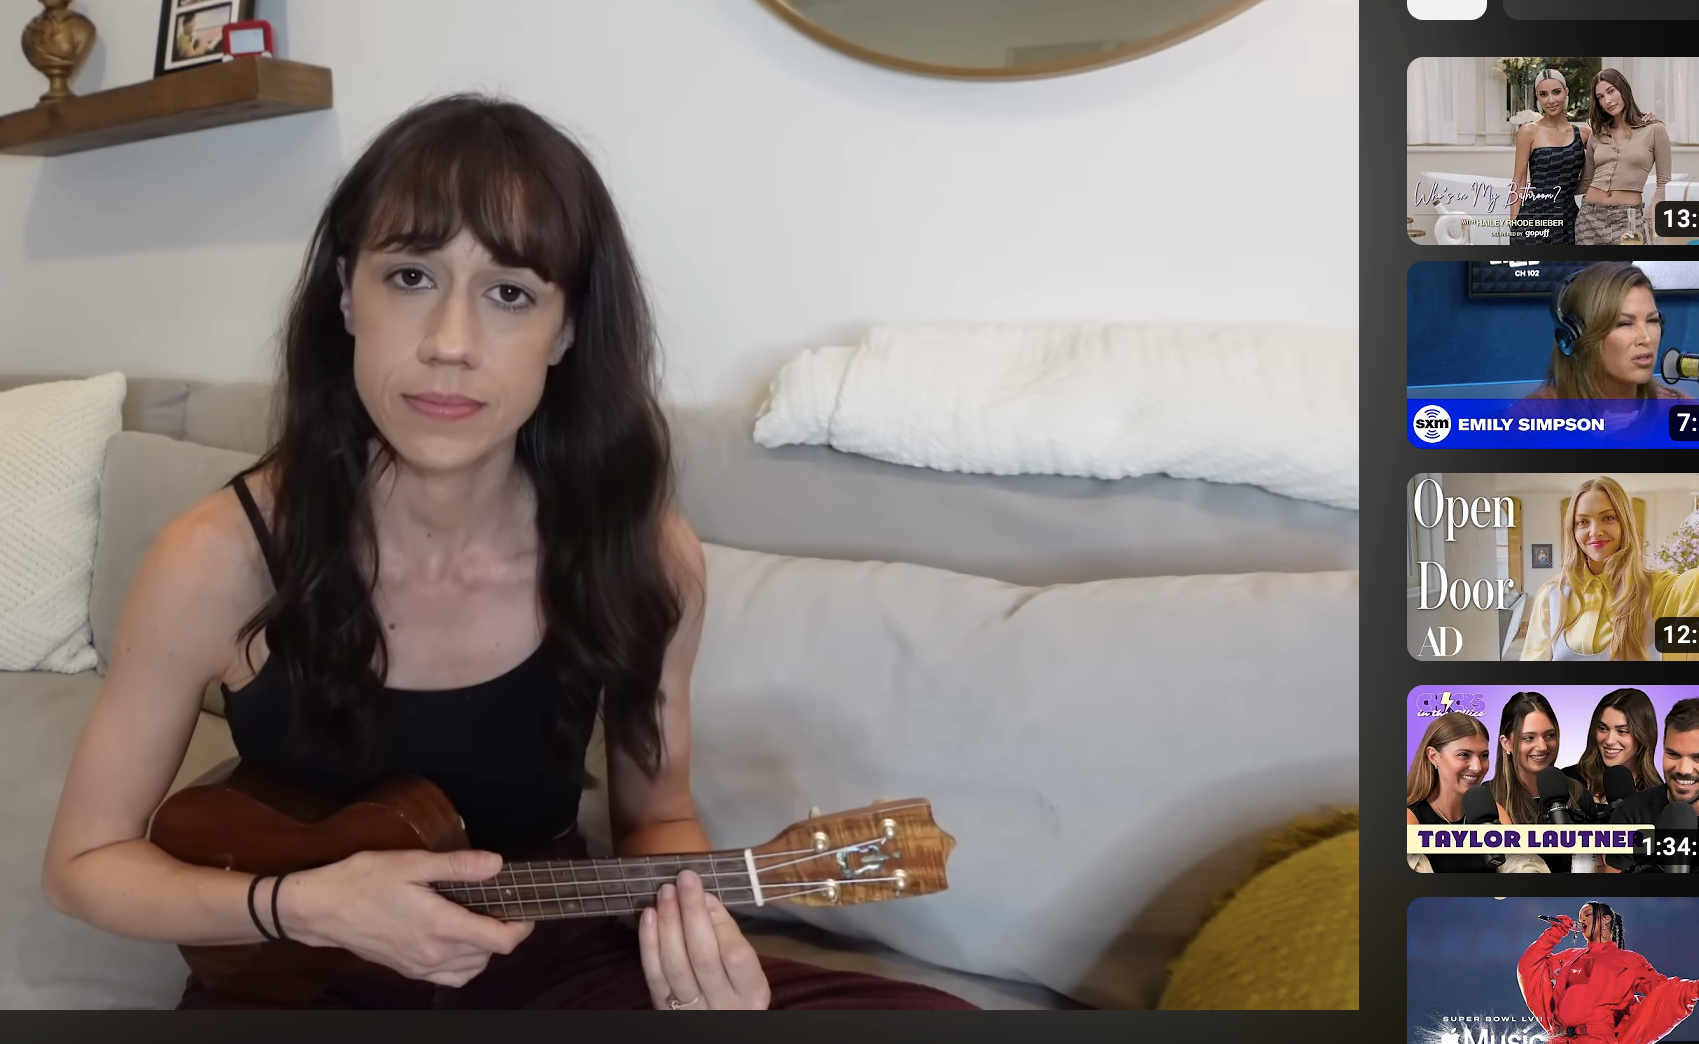 Closeup of Colleen playing the ukulele